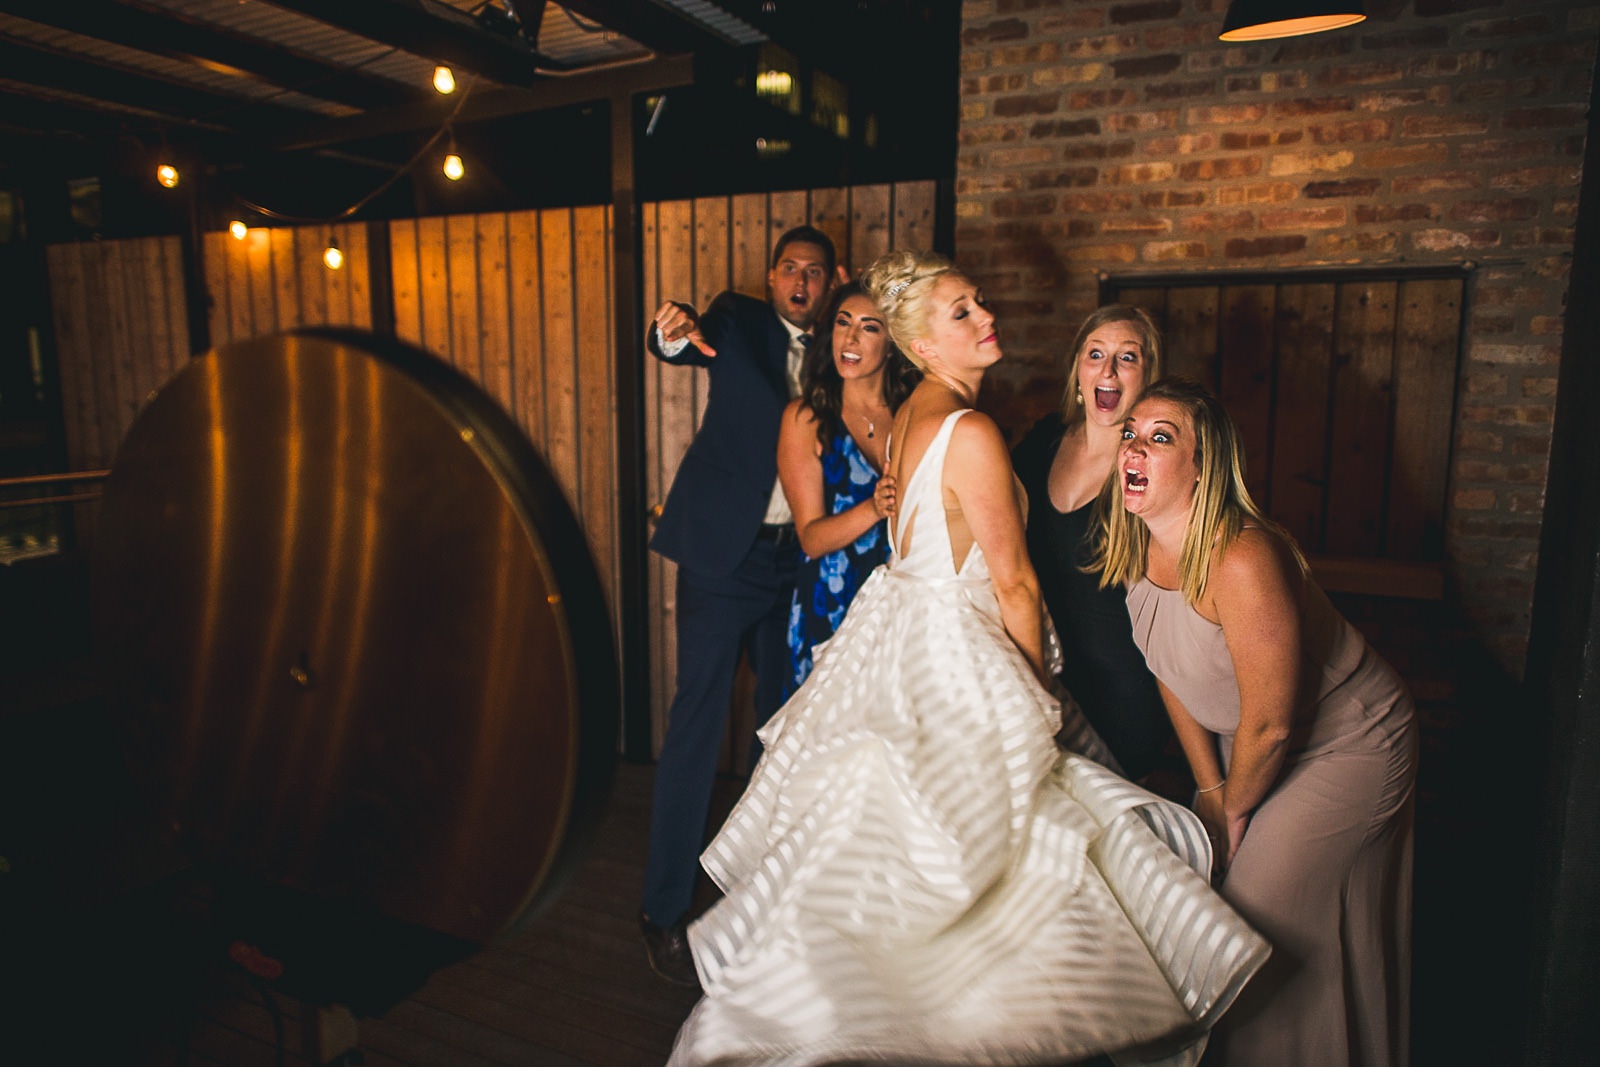 60 fun with photobooth at chicago wedding - Morgan's on Fulton Wedding Photos // Jessica + Bill